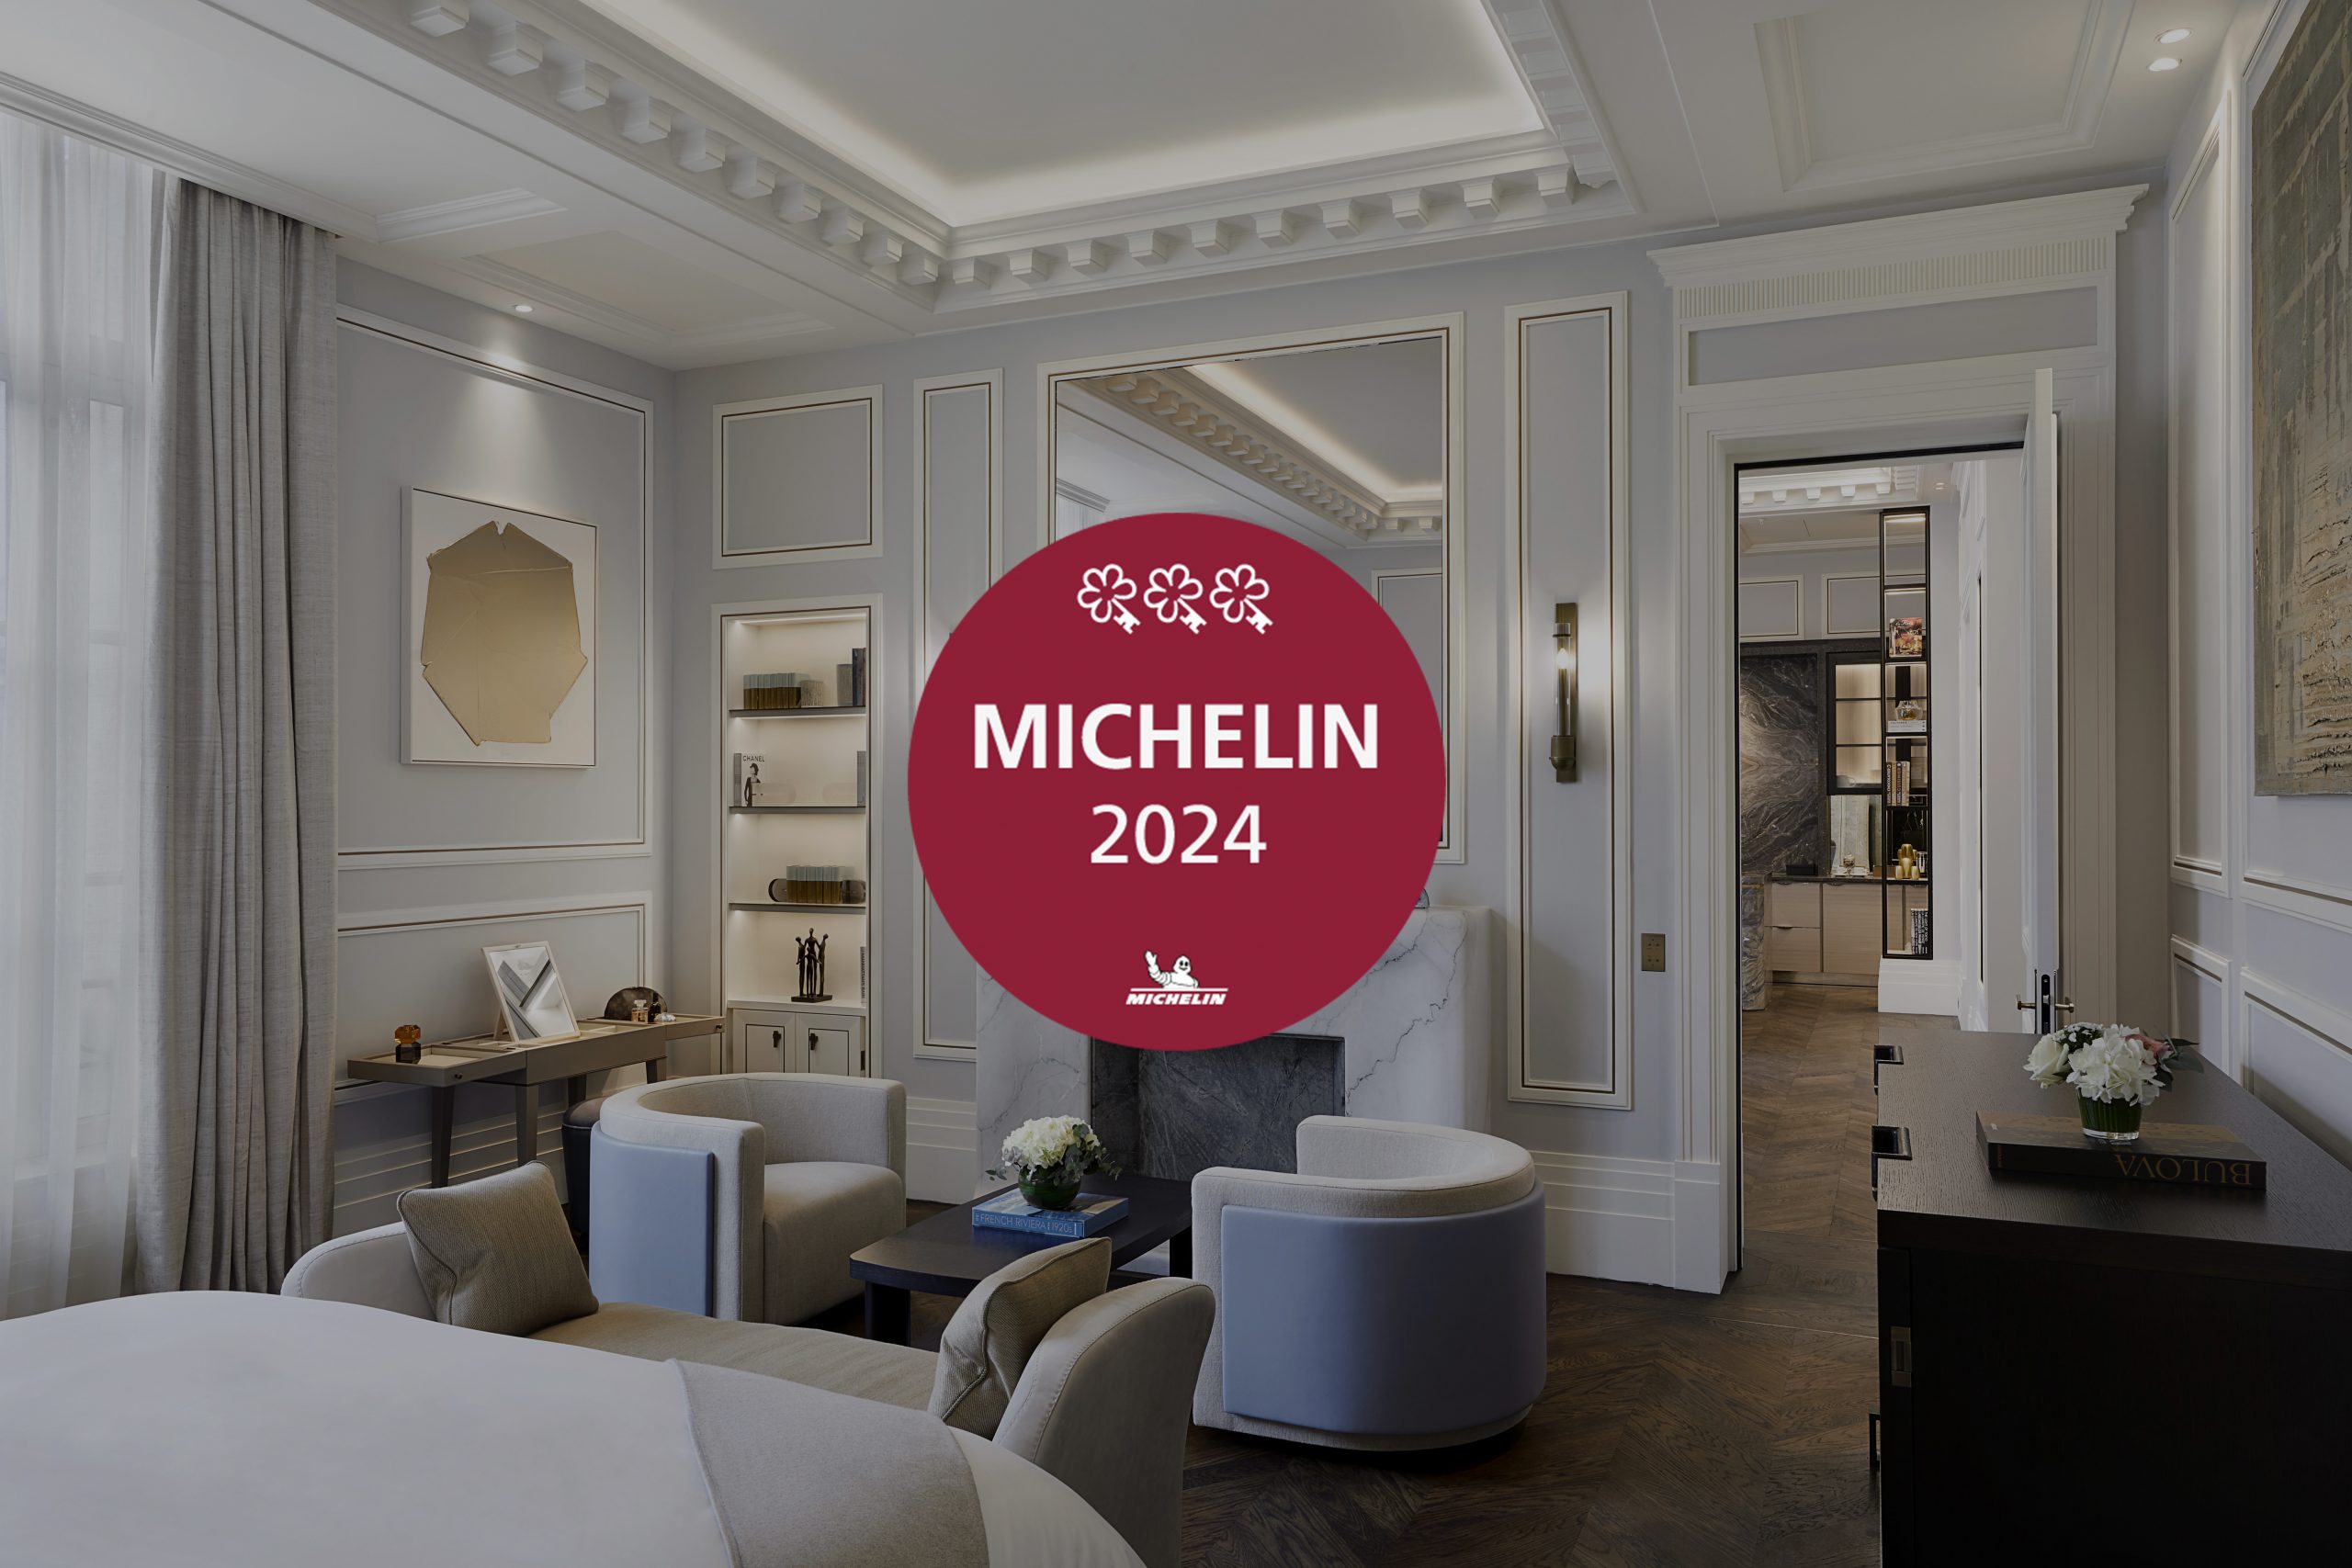 Maison Villeroy receives three Michelin Keys